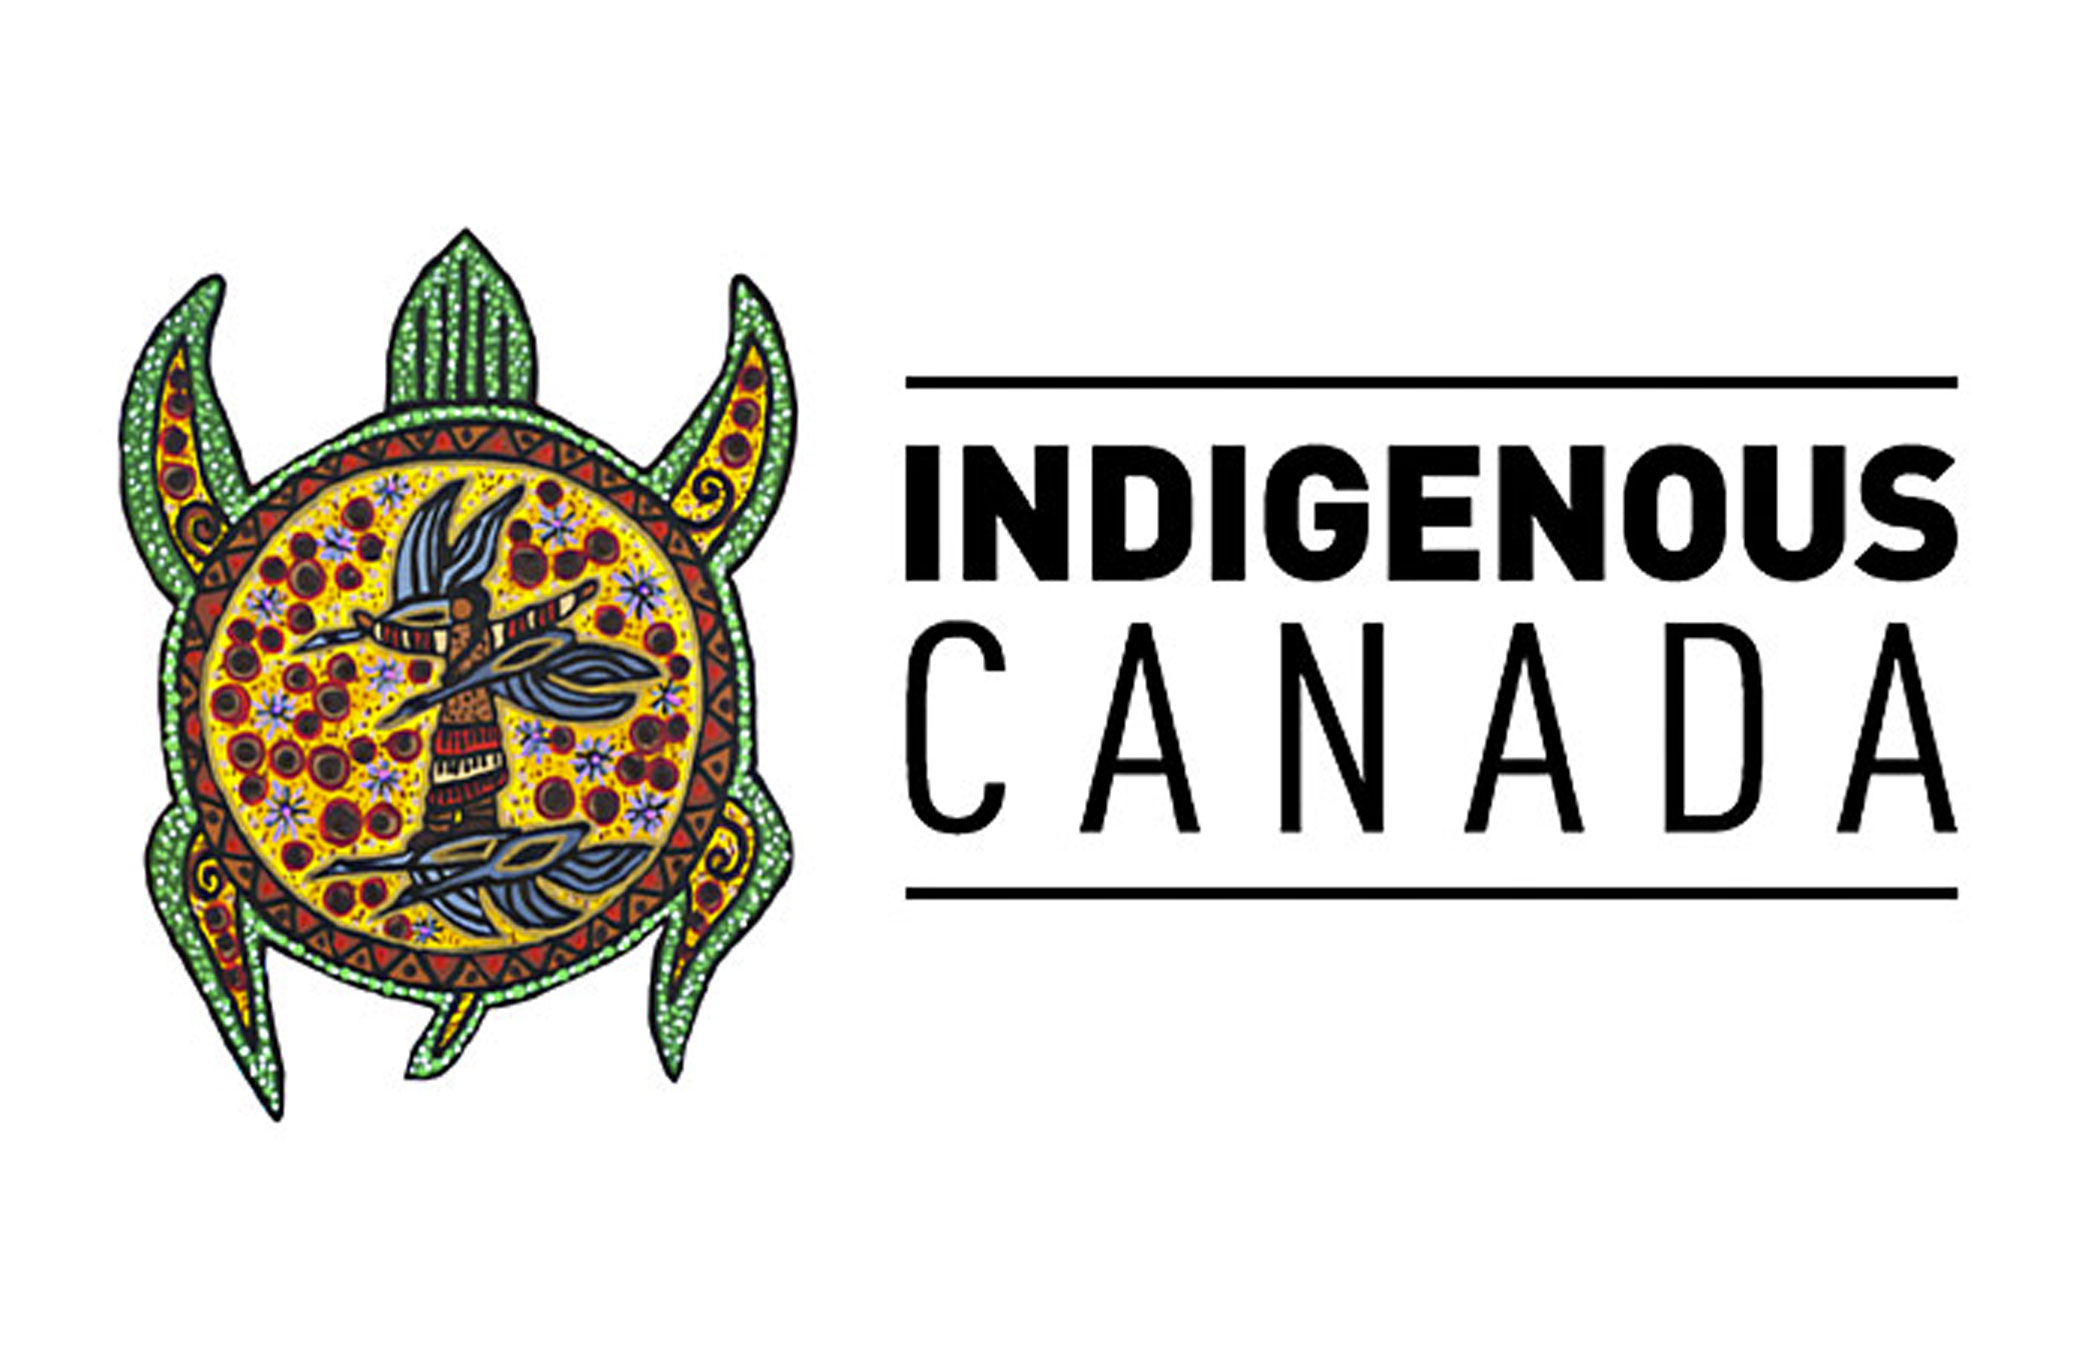 Indigenous Canada logo